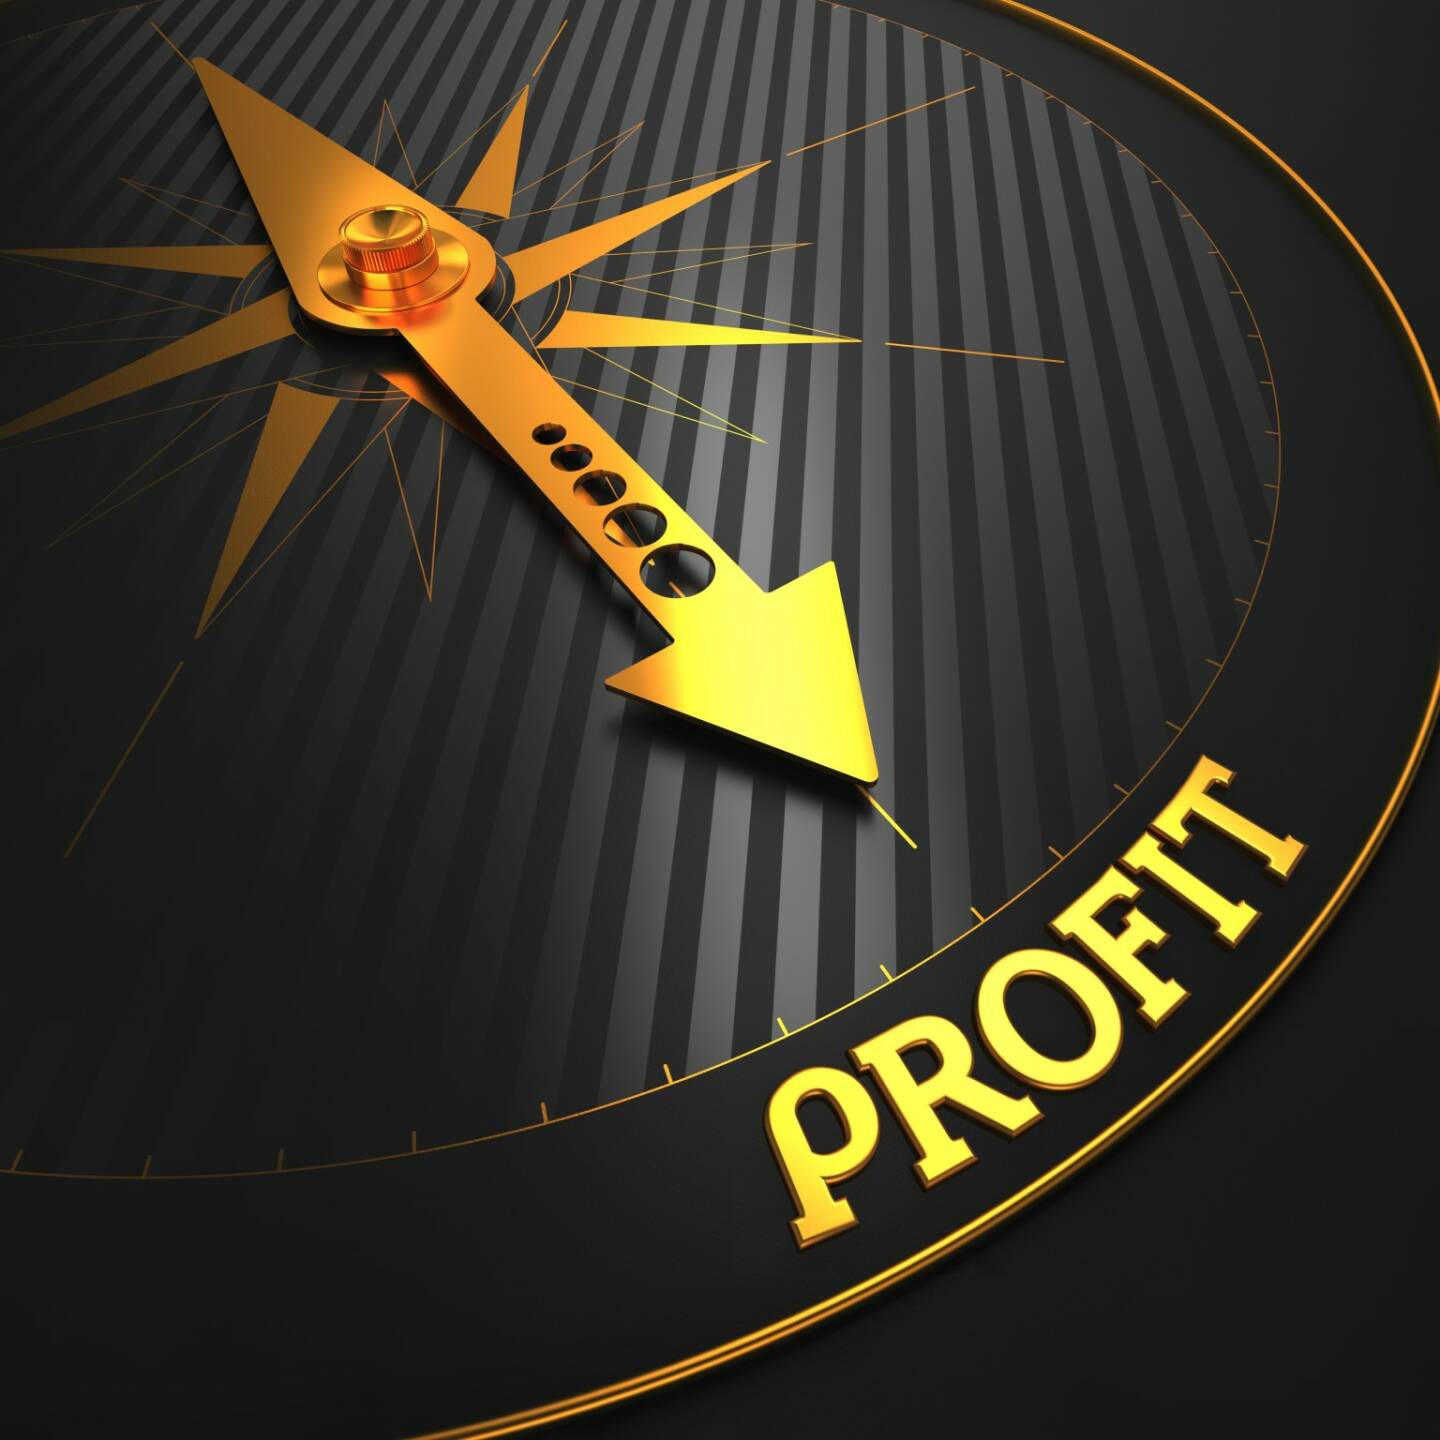 Profit, Rendite, Kompass, http://www.shutterstock.com/de/pic-162771446/stock-photo-profit-business-concept-golden-compass-needle-on-a-black-field-pointing-to-the-word-profit.html